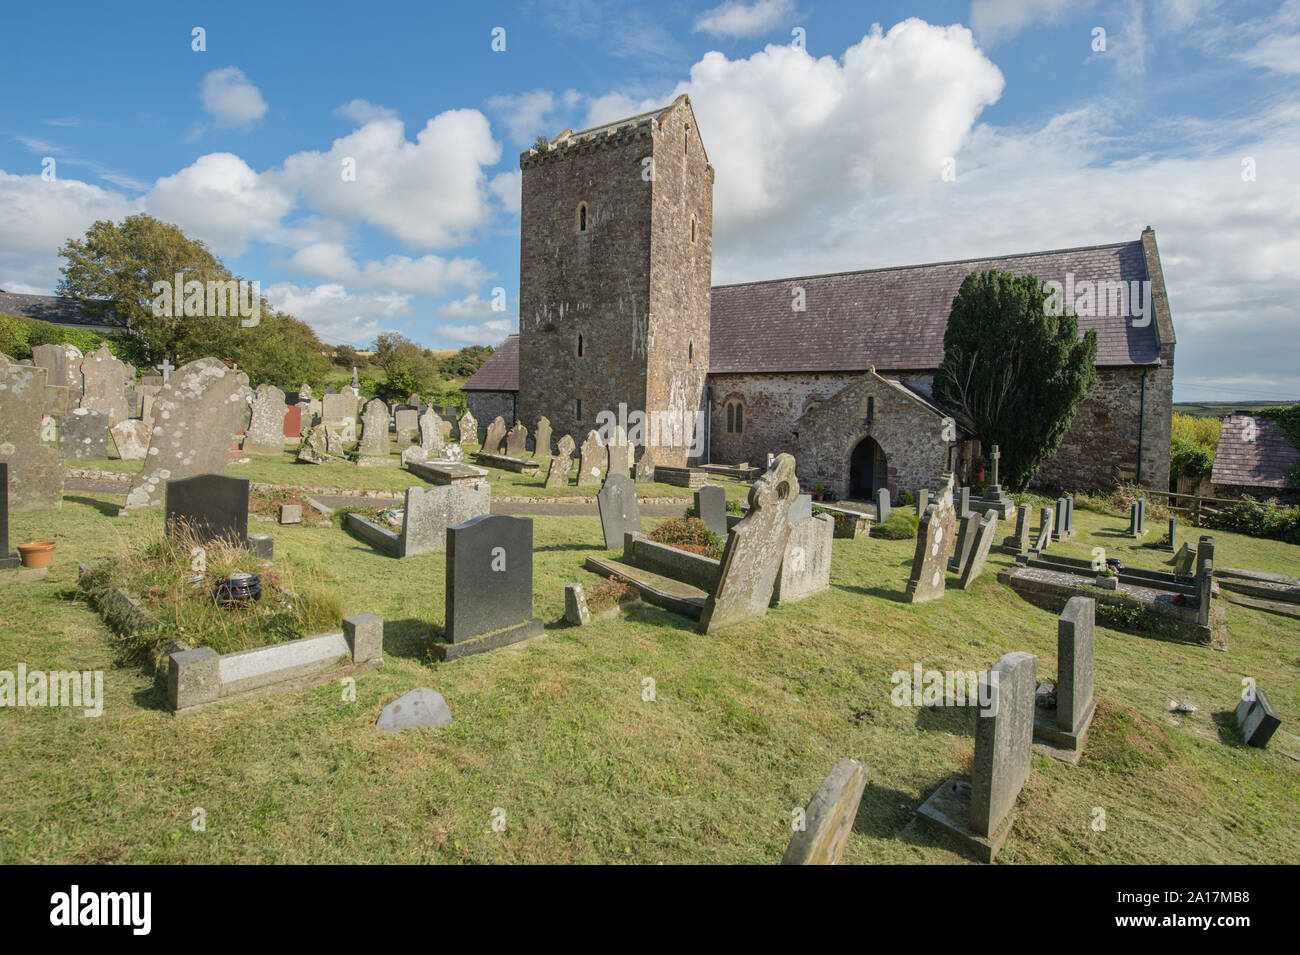 St Cenydd’s Church, Llangennith , a 12th century church on the site of a 6th century llan, or churchyard, which retains the original circular footprint. Llangennith, Gower Wales UK Stock Photo